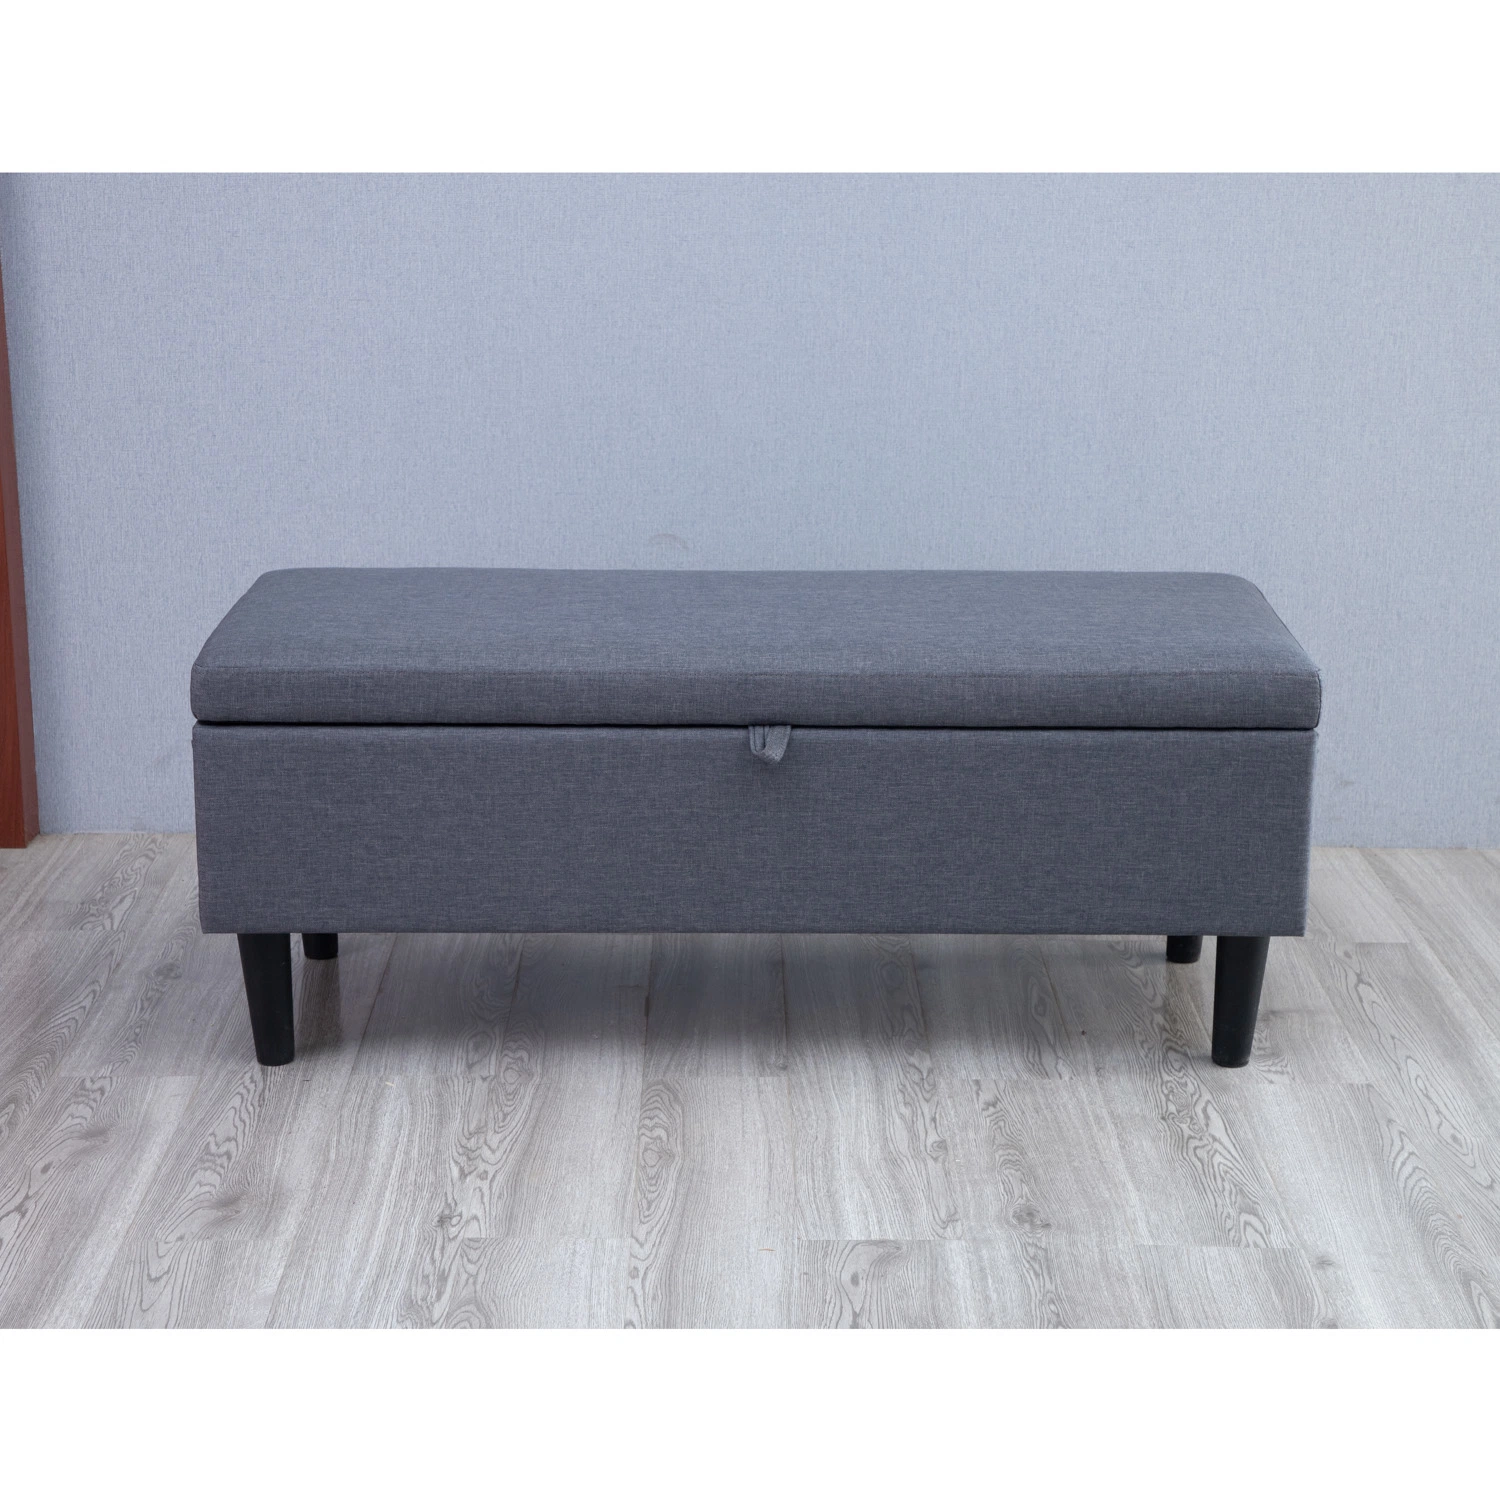 New Huayang Customized Modern Wooden Stylish Ottomans Modern Furniture Bench